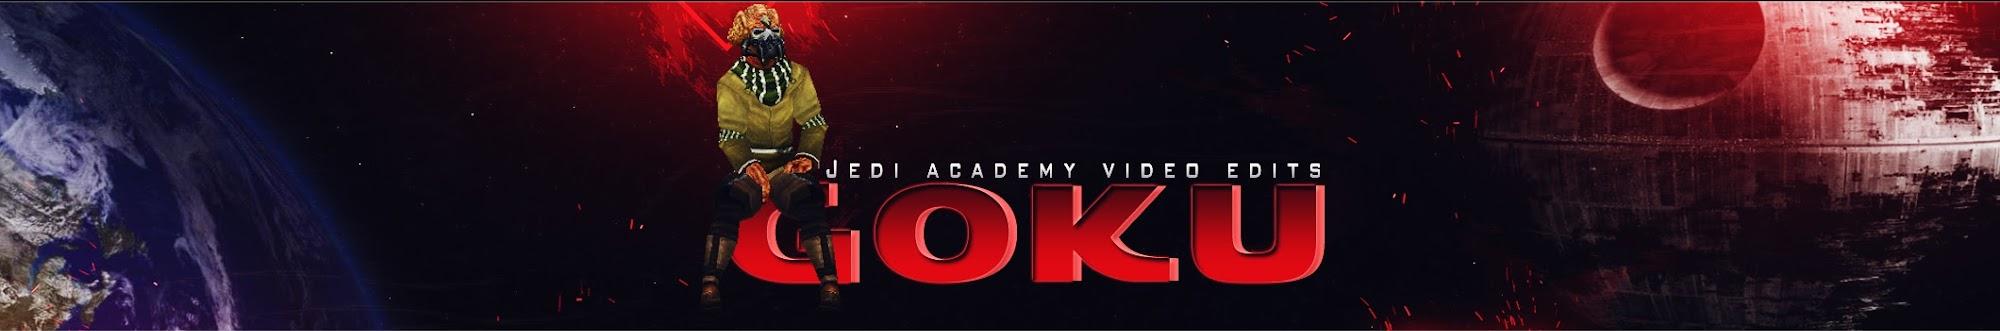 Jedi Academy videos